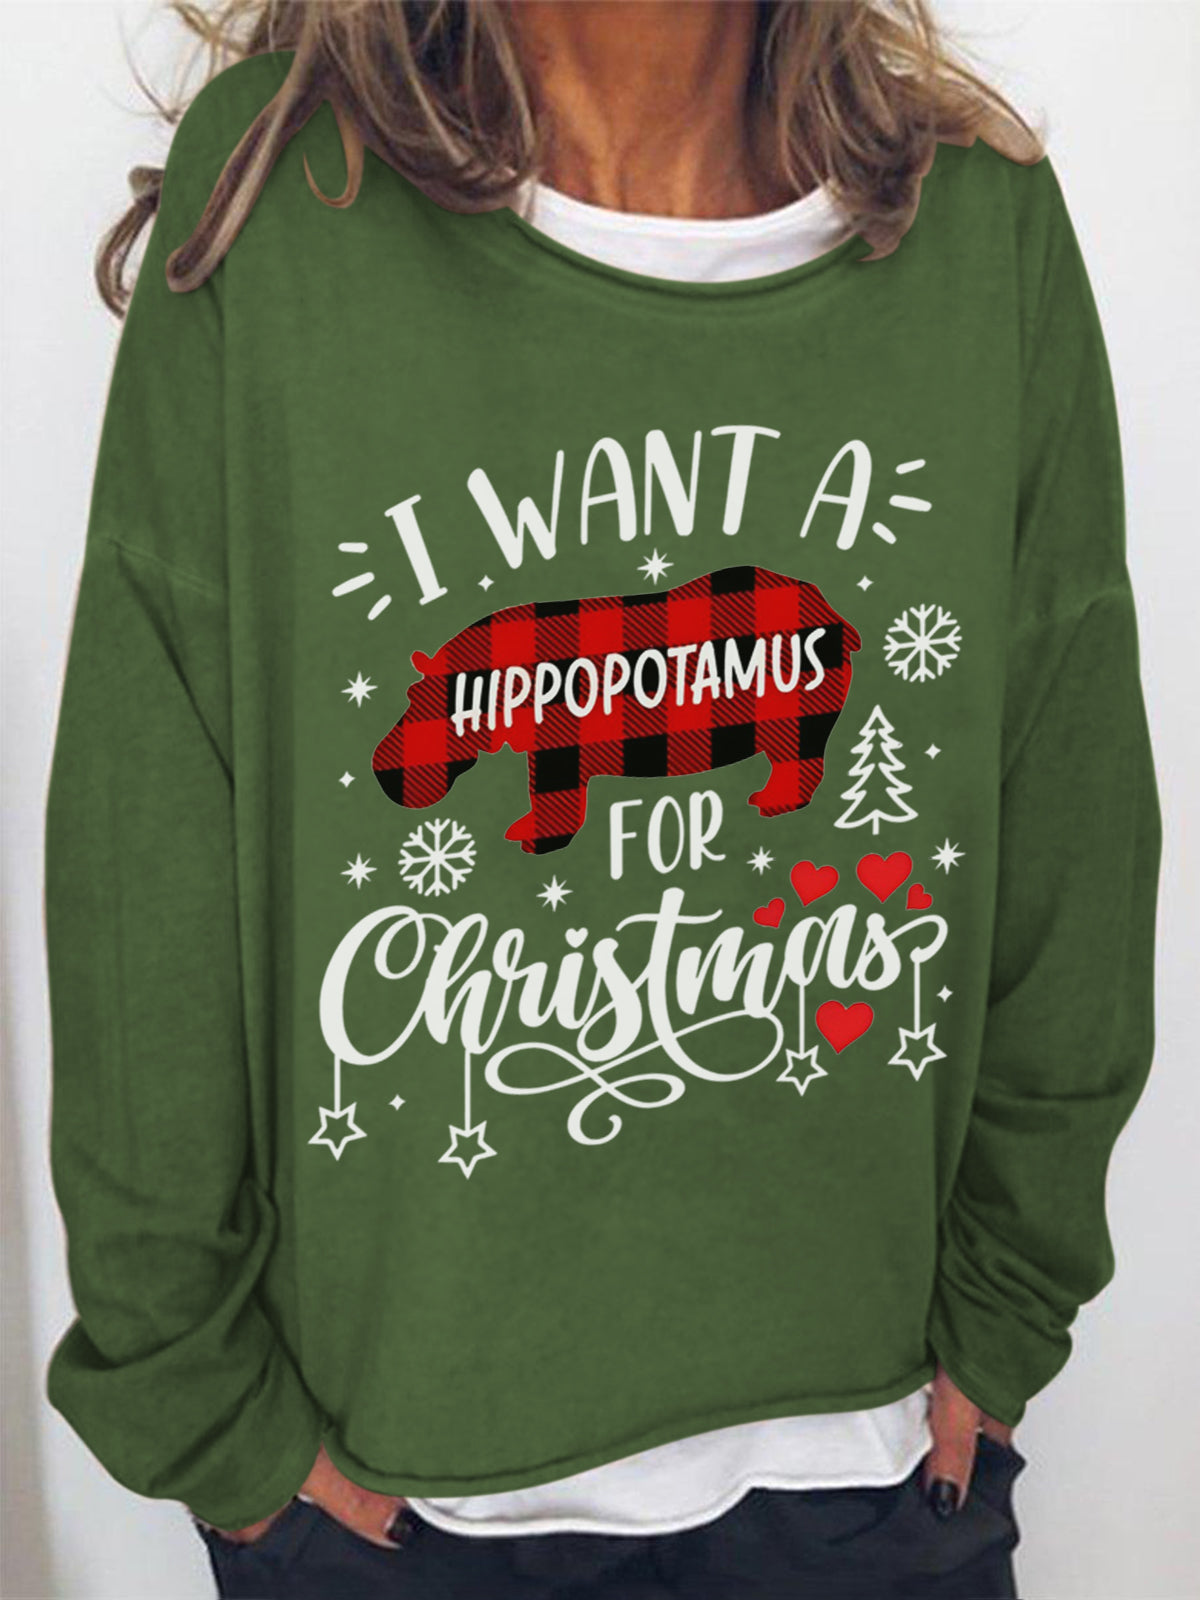 I Want A Hippopotamus For Christmas Holiday Casual Sweatshirt